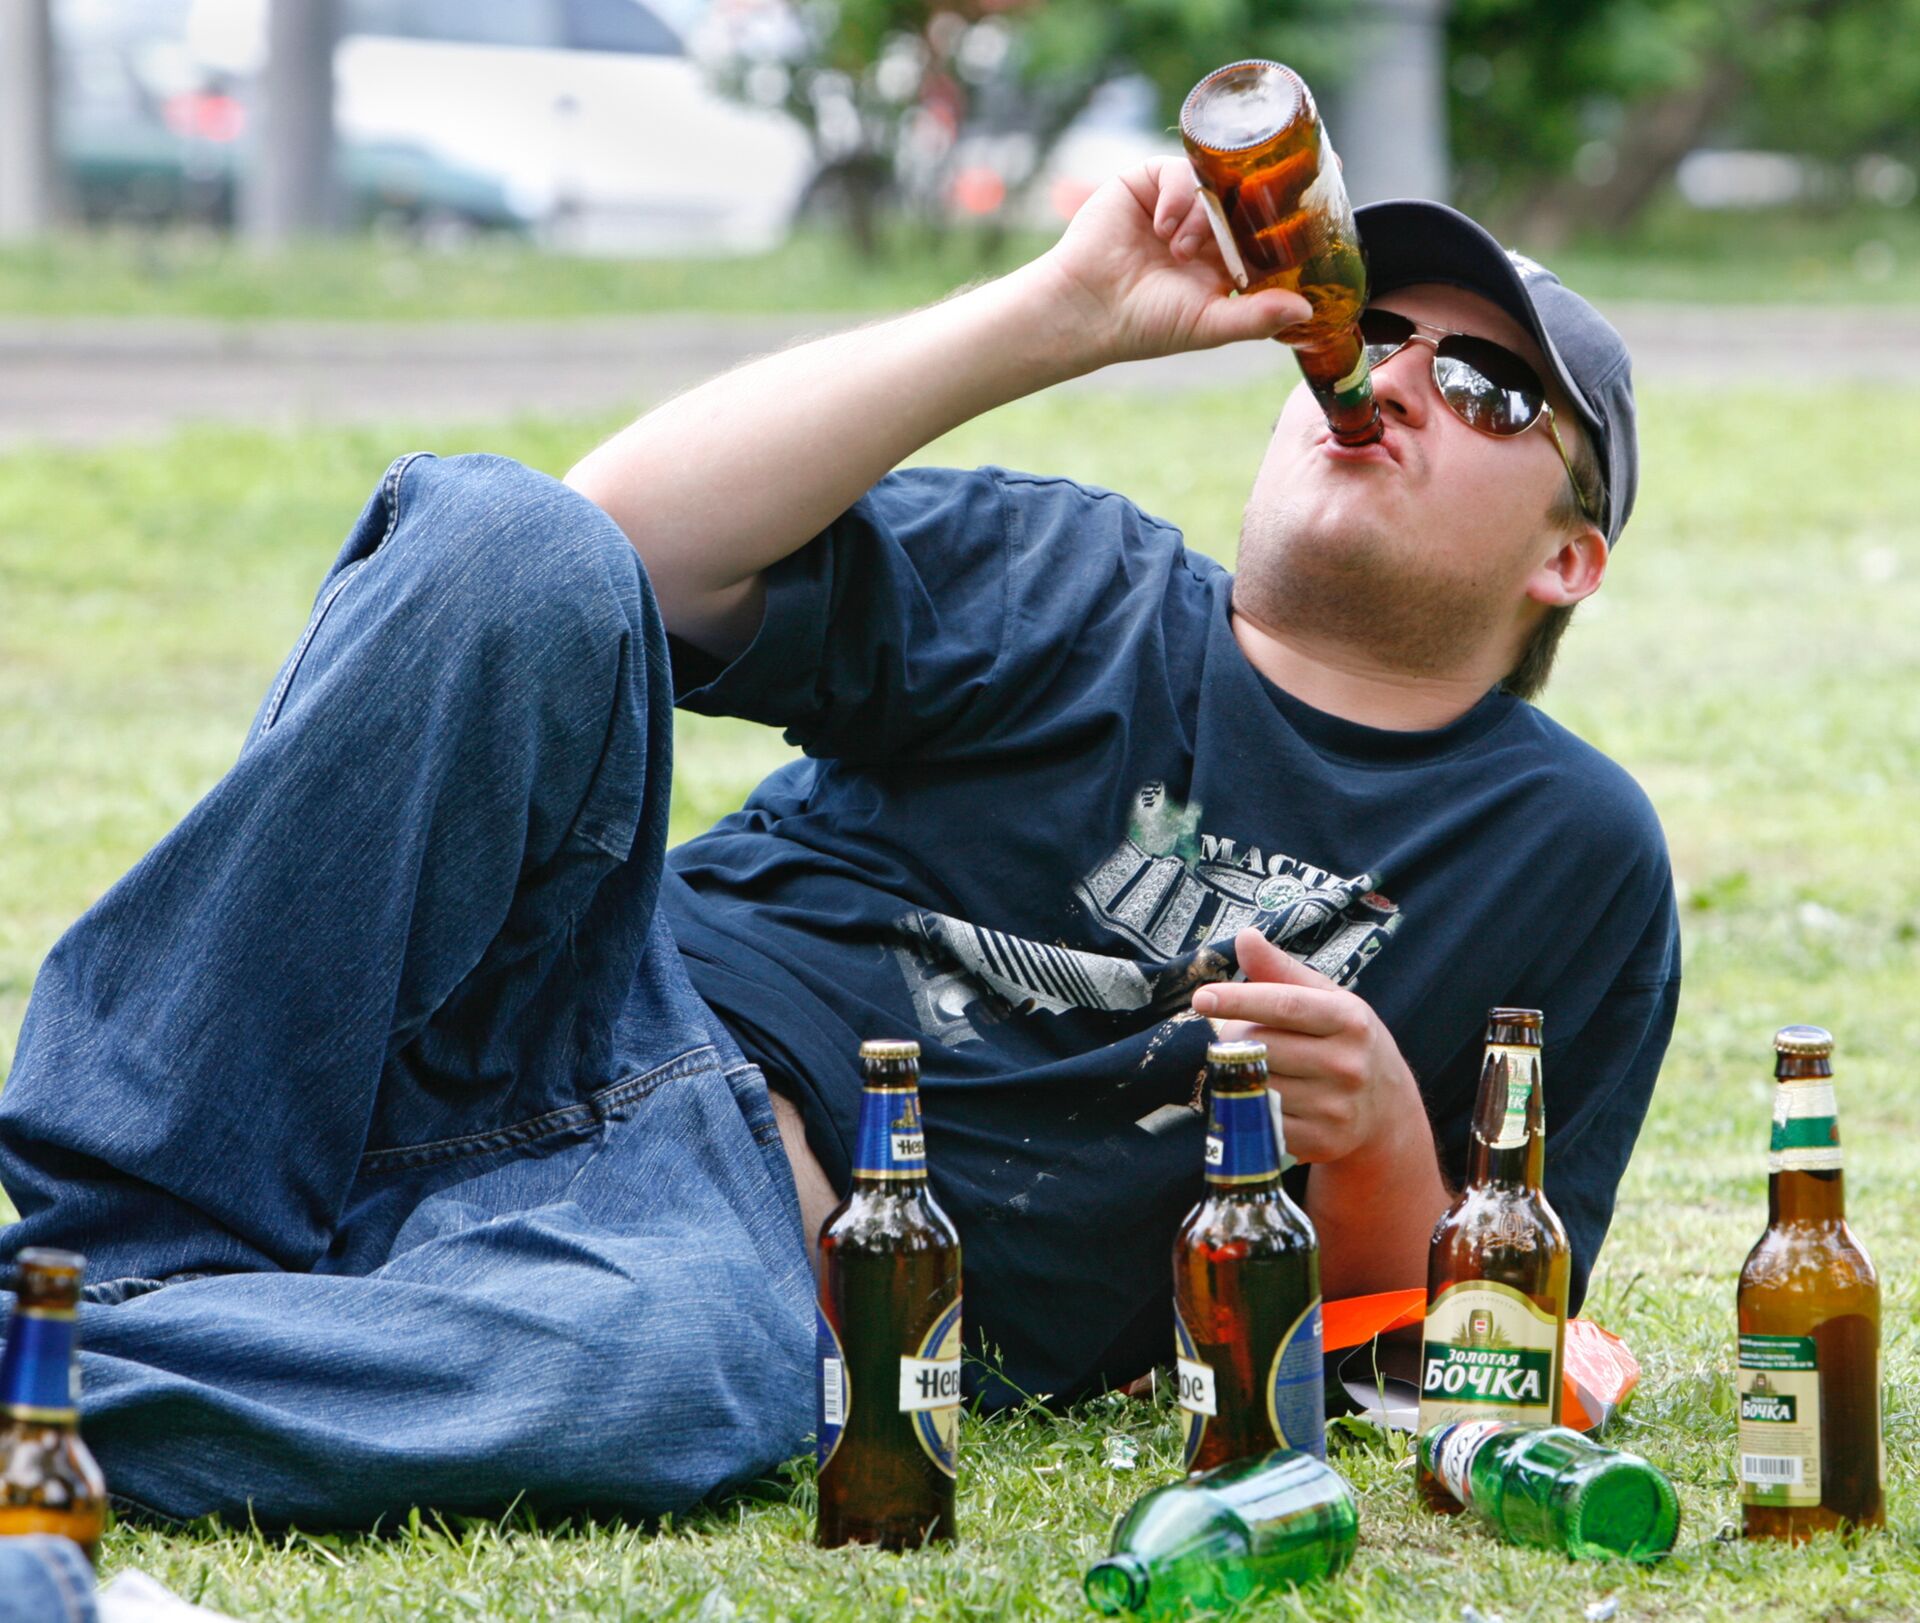 Плохие пьют пиво. Алкаш с пивом. Человек с пивом. Пьющий алкоголь человек. Человек пьет пиво.